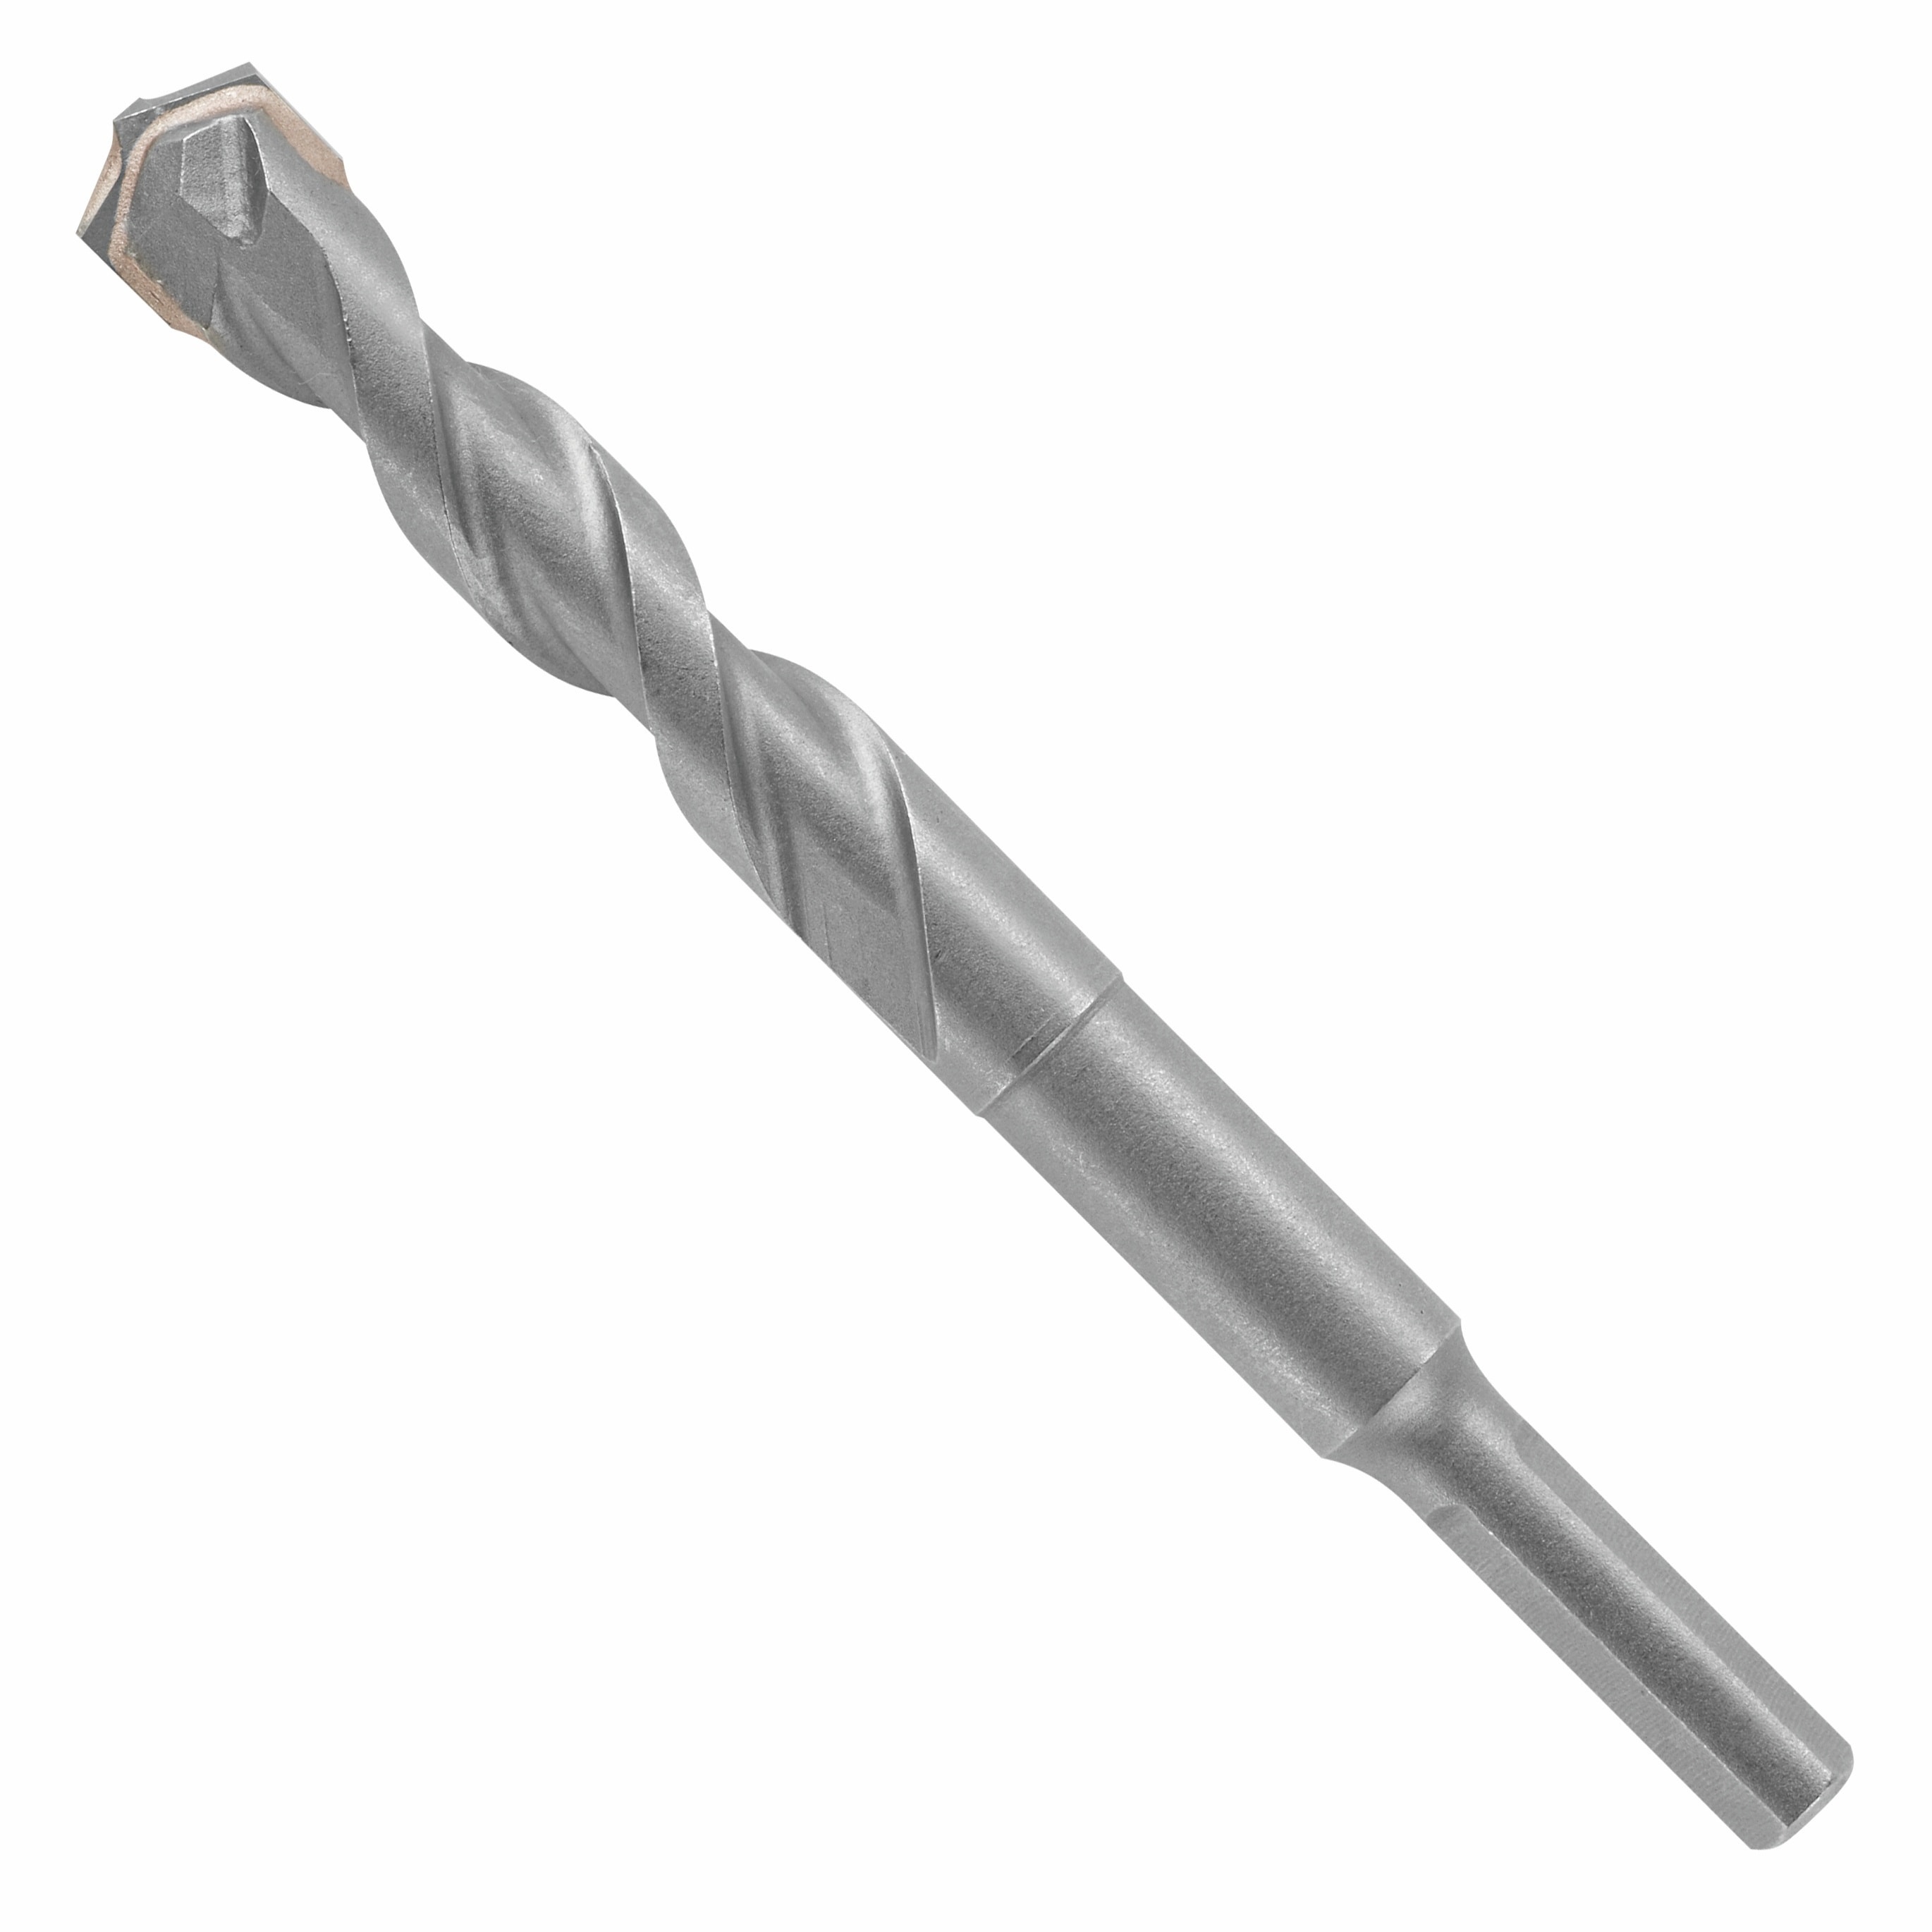 1 pc SDS Plus 5/8"x8" or 5/8"x6"x8" Concrete Masonry Hammer Drill Bit  sct-888 